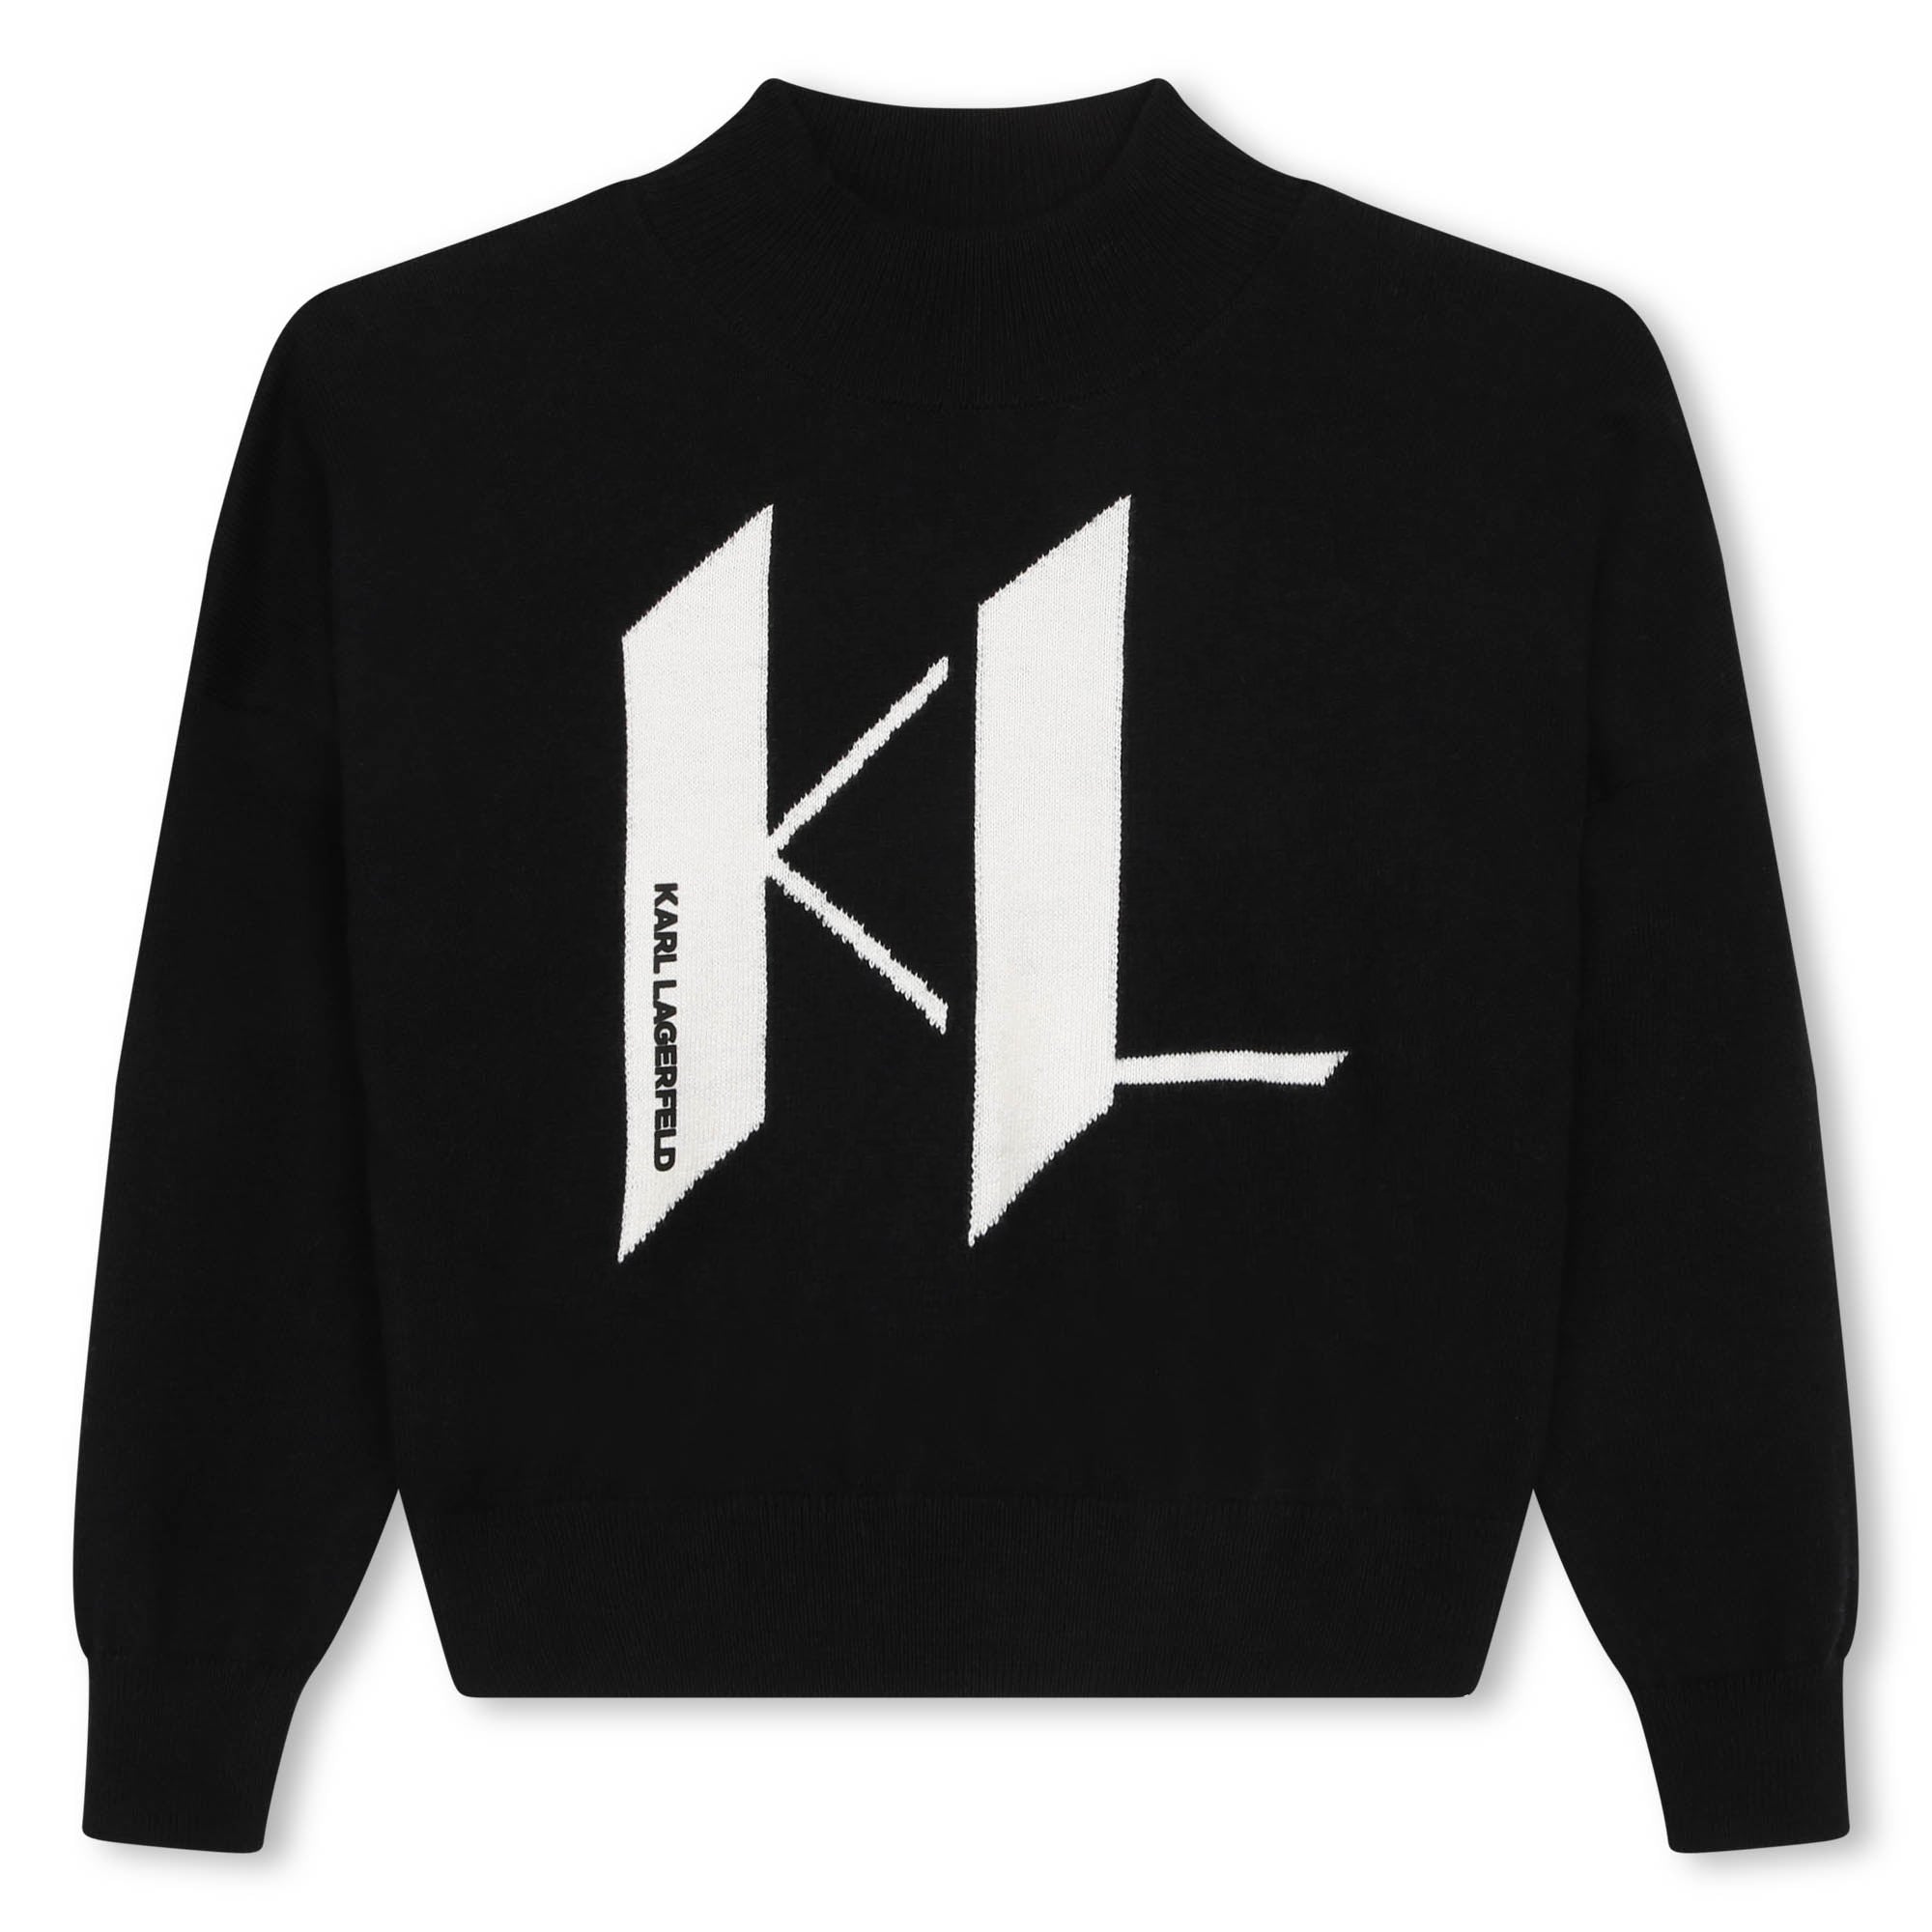 KL logo artwork sweater by Karl Lagerfeld